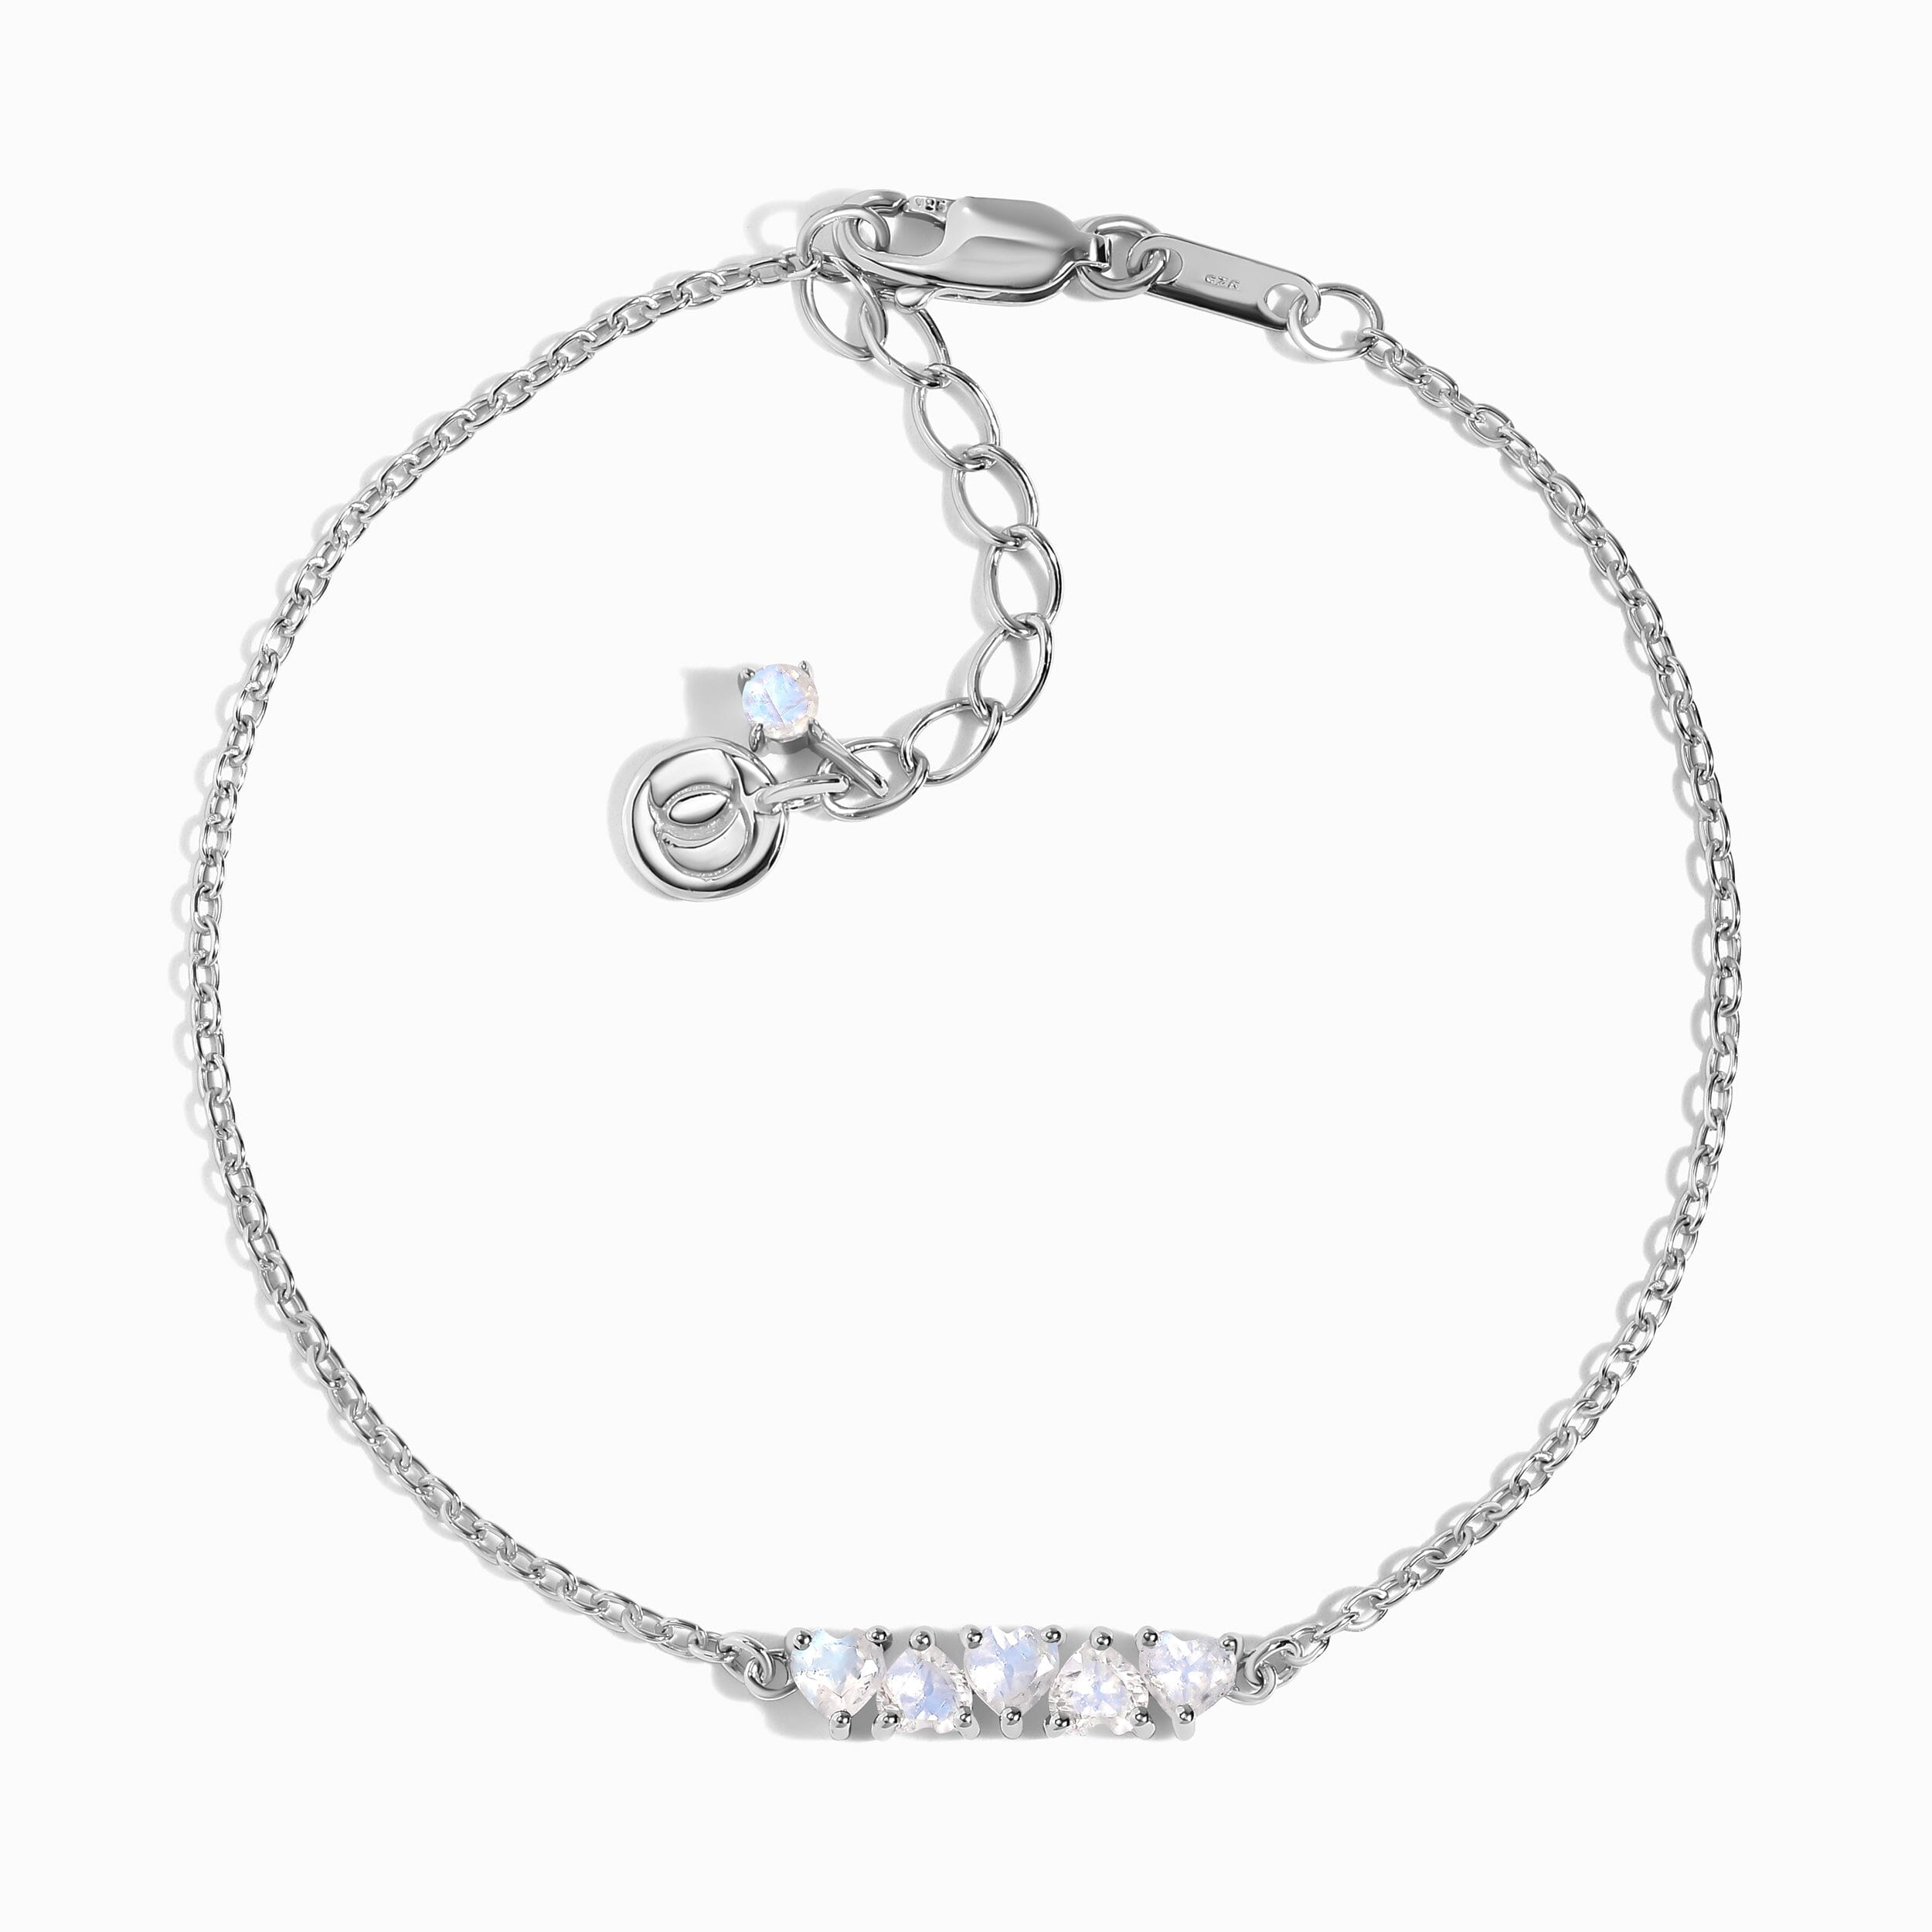 6 Pcs Miss Bracelet Extender Sterling Silver Anklet Chain